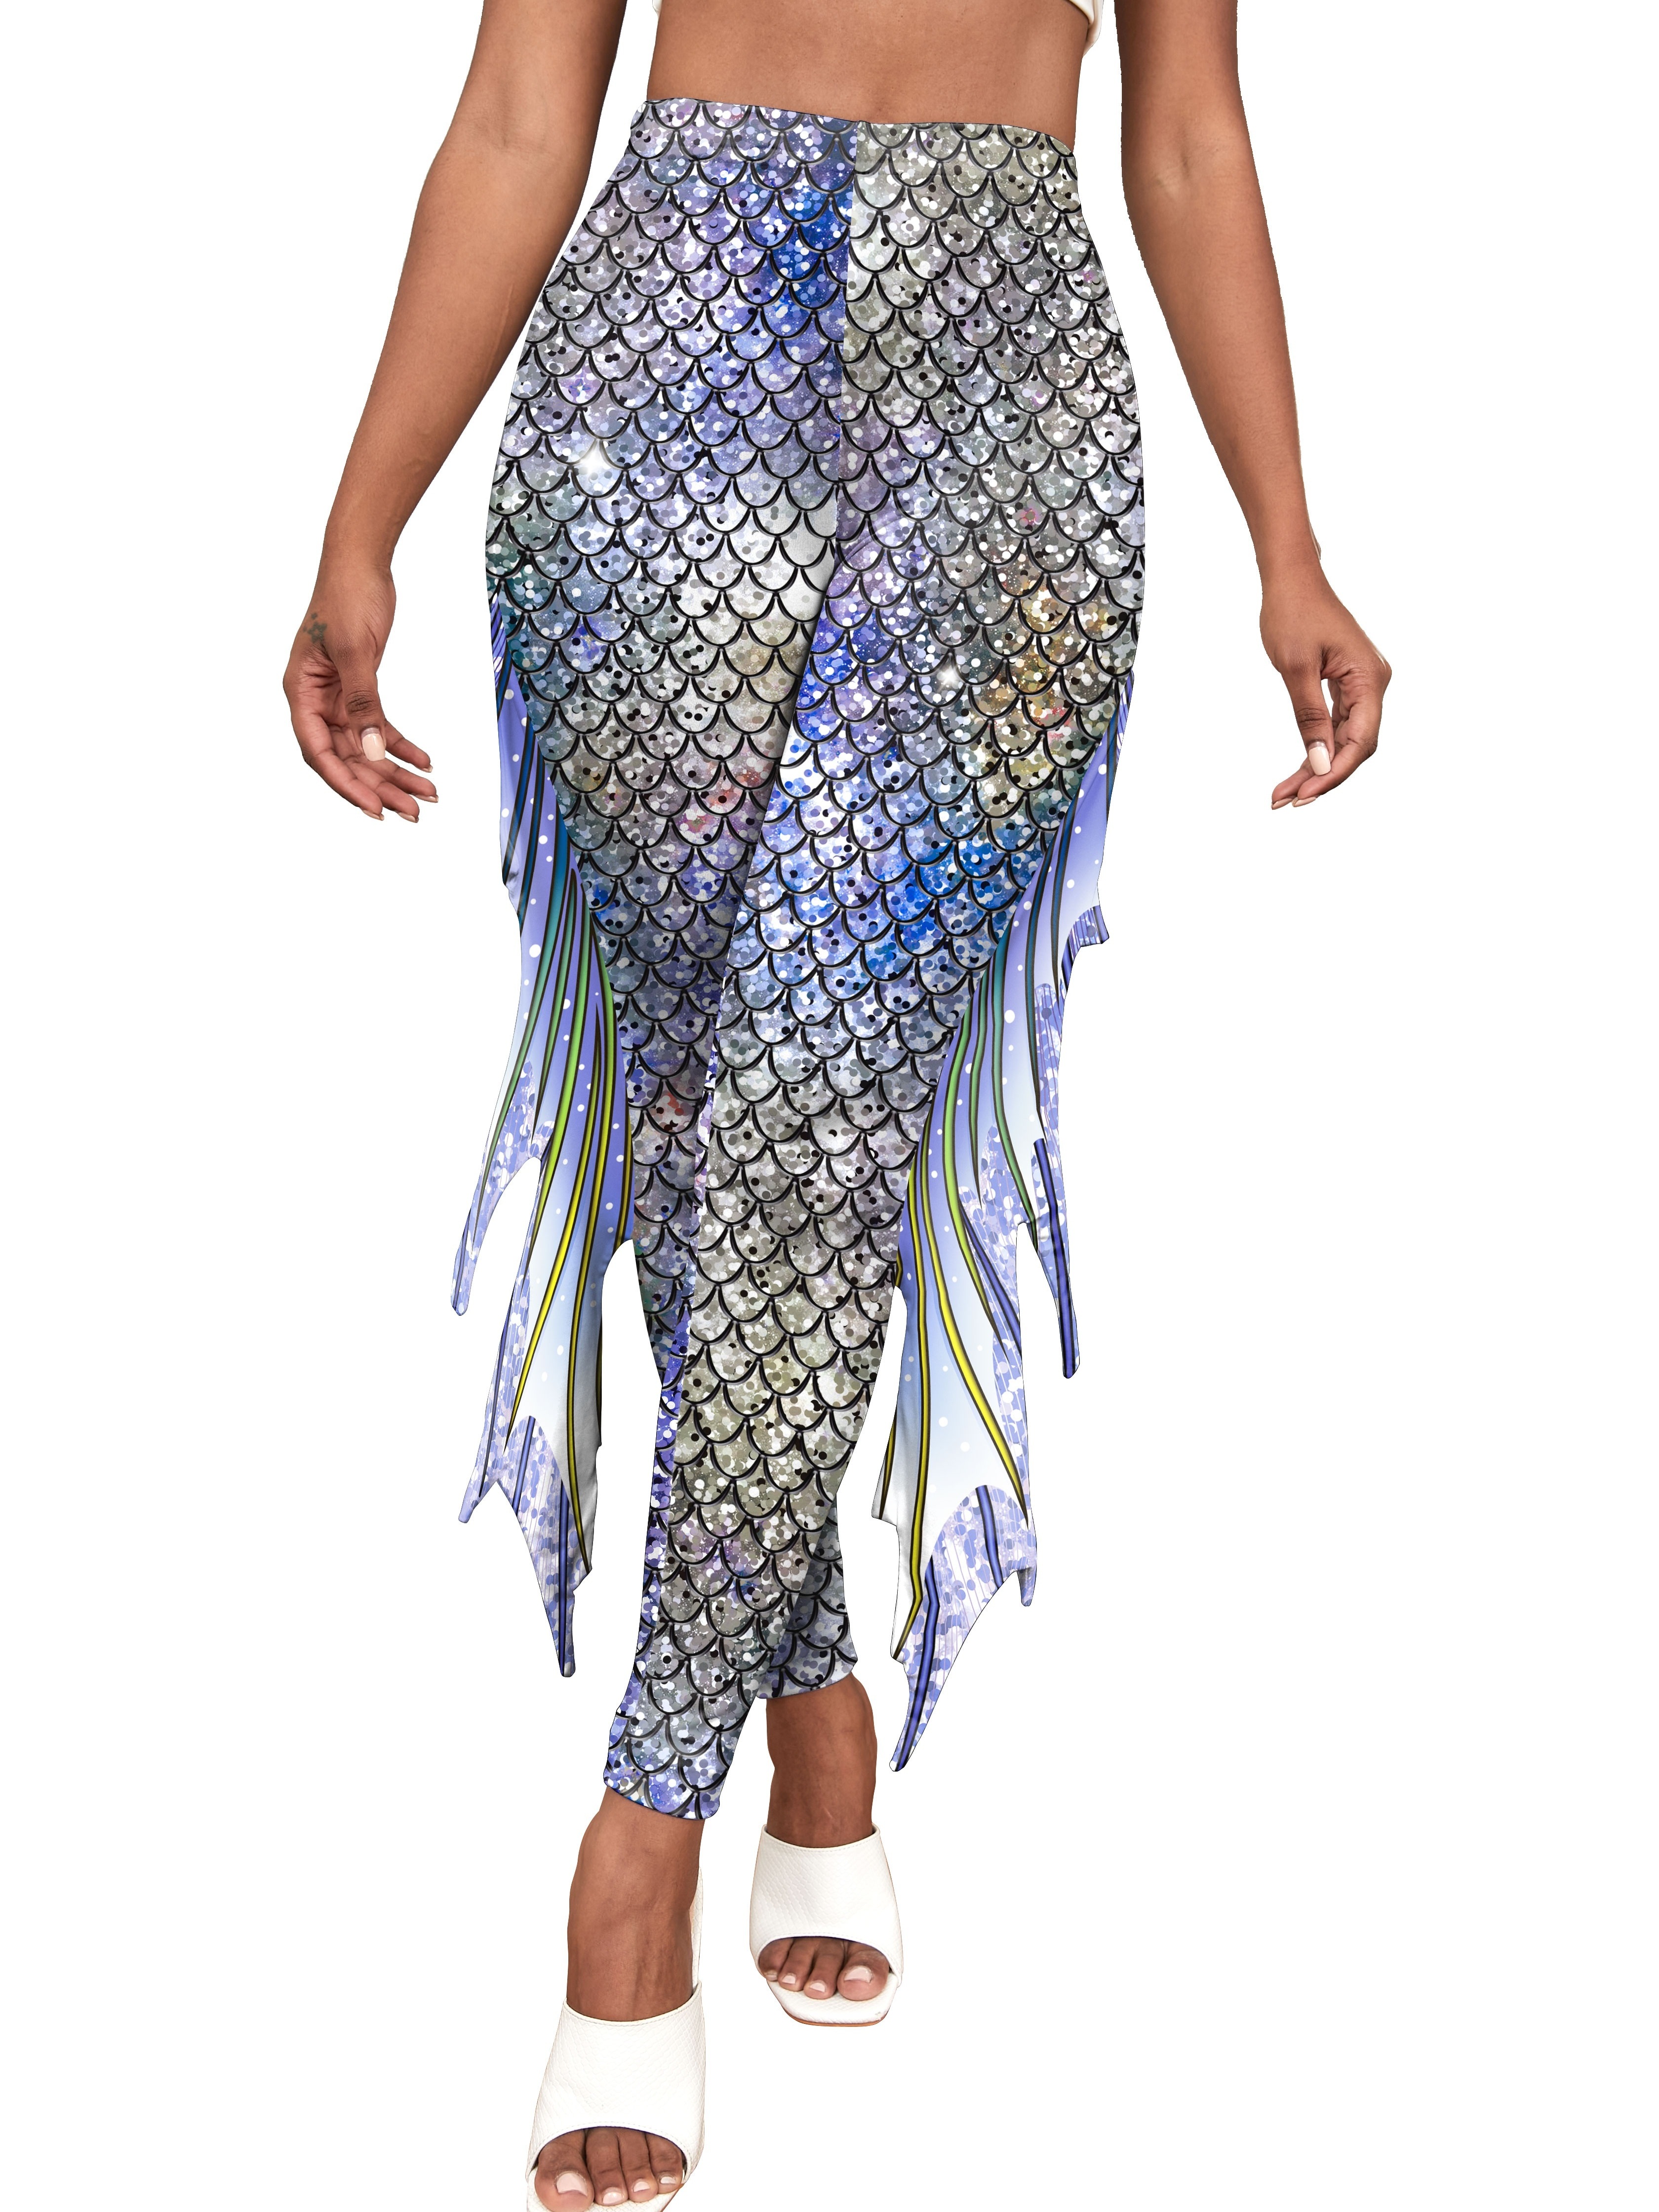 Lavender Fish Scale Mermaid High Waist Legging